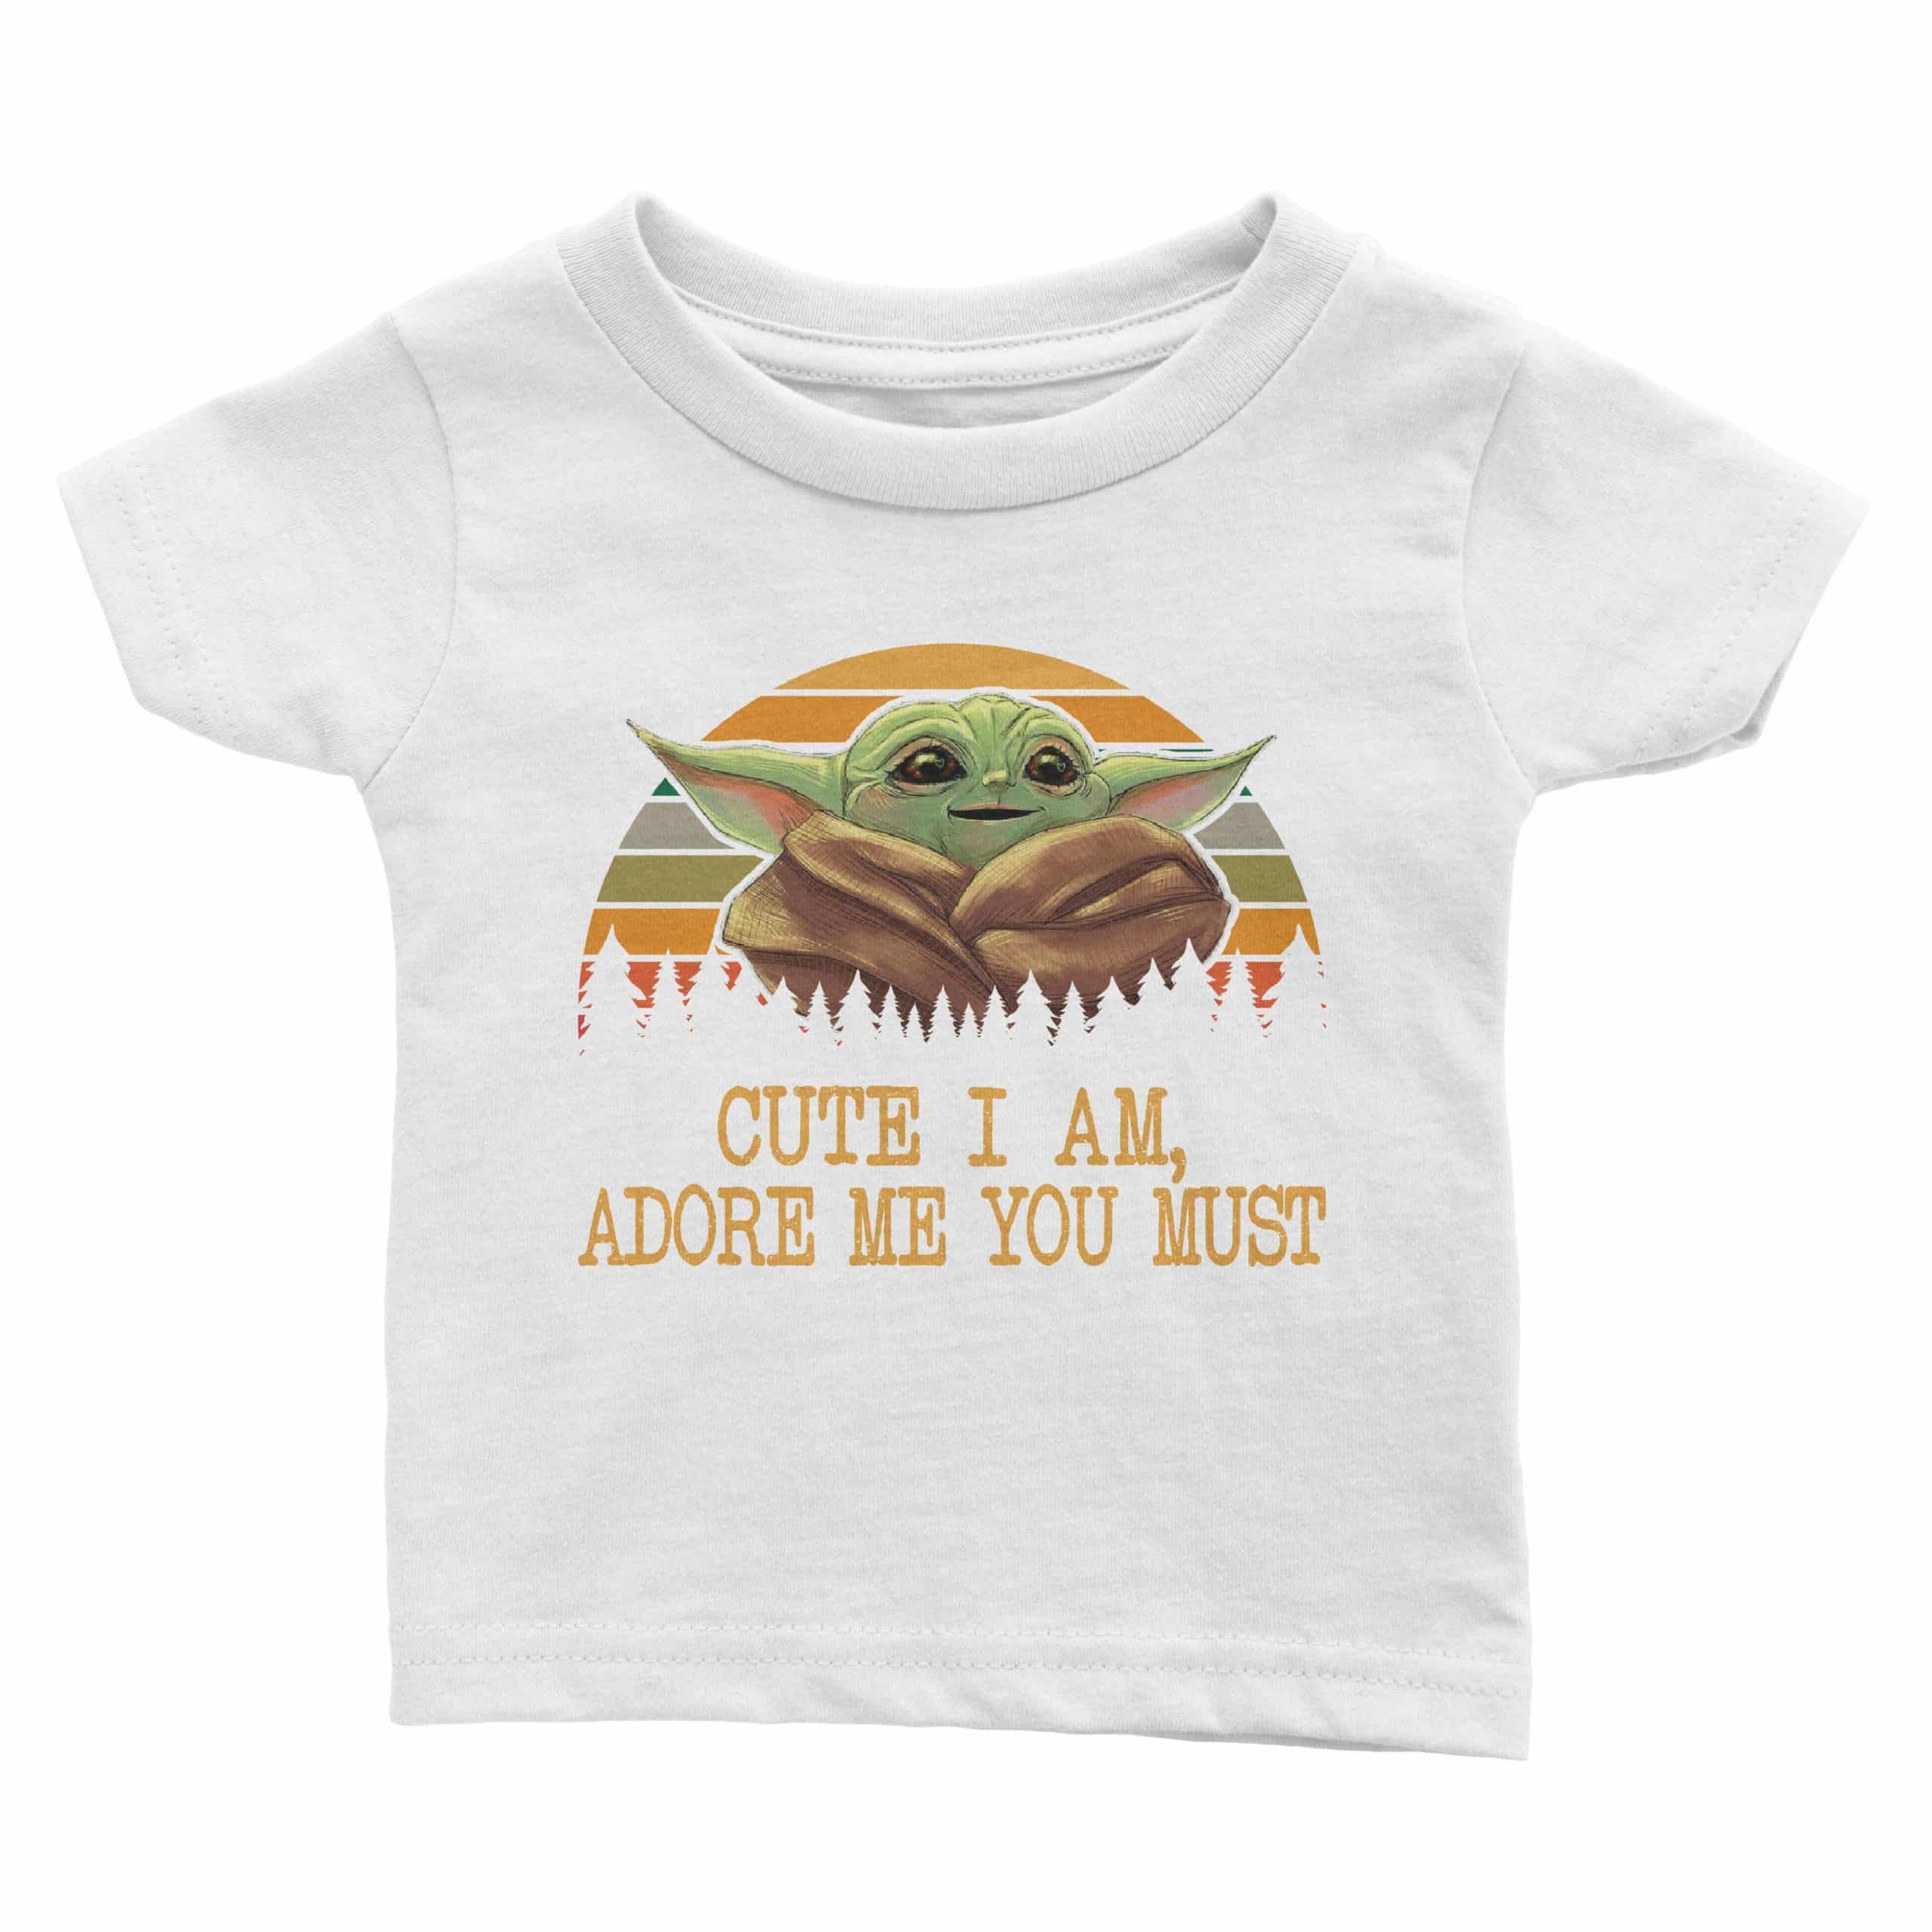 Cute I Am Baby Yoda T-Shirt (Youth) Pink 3-6 Months